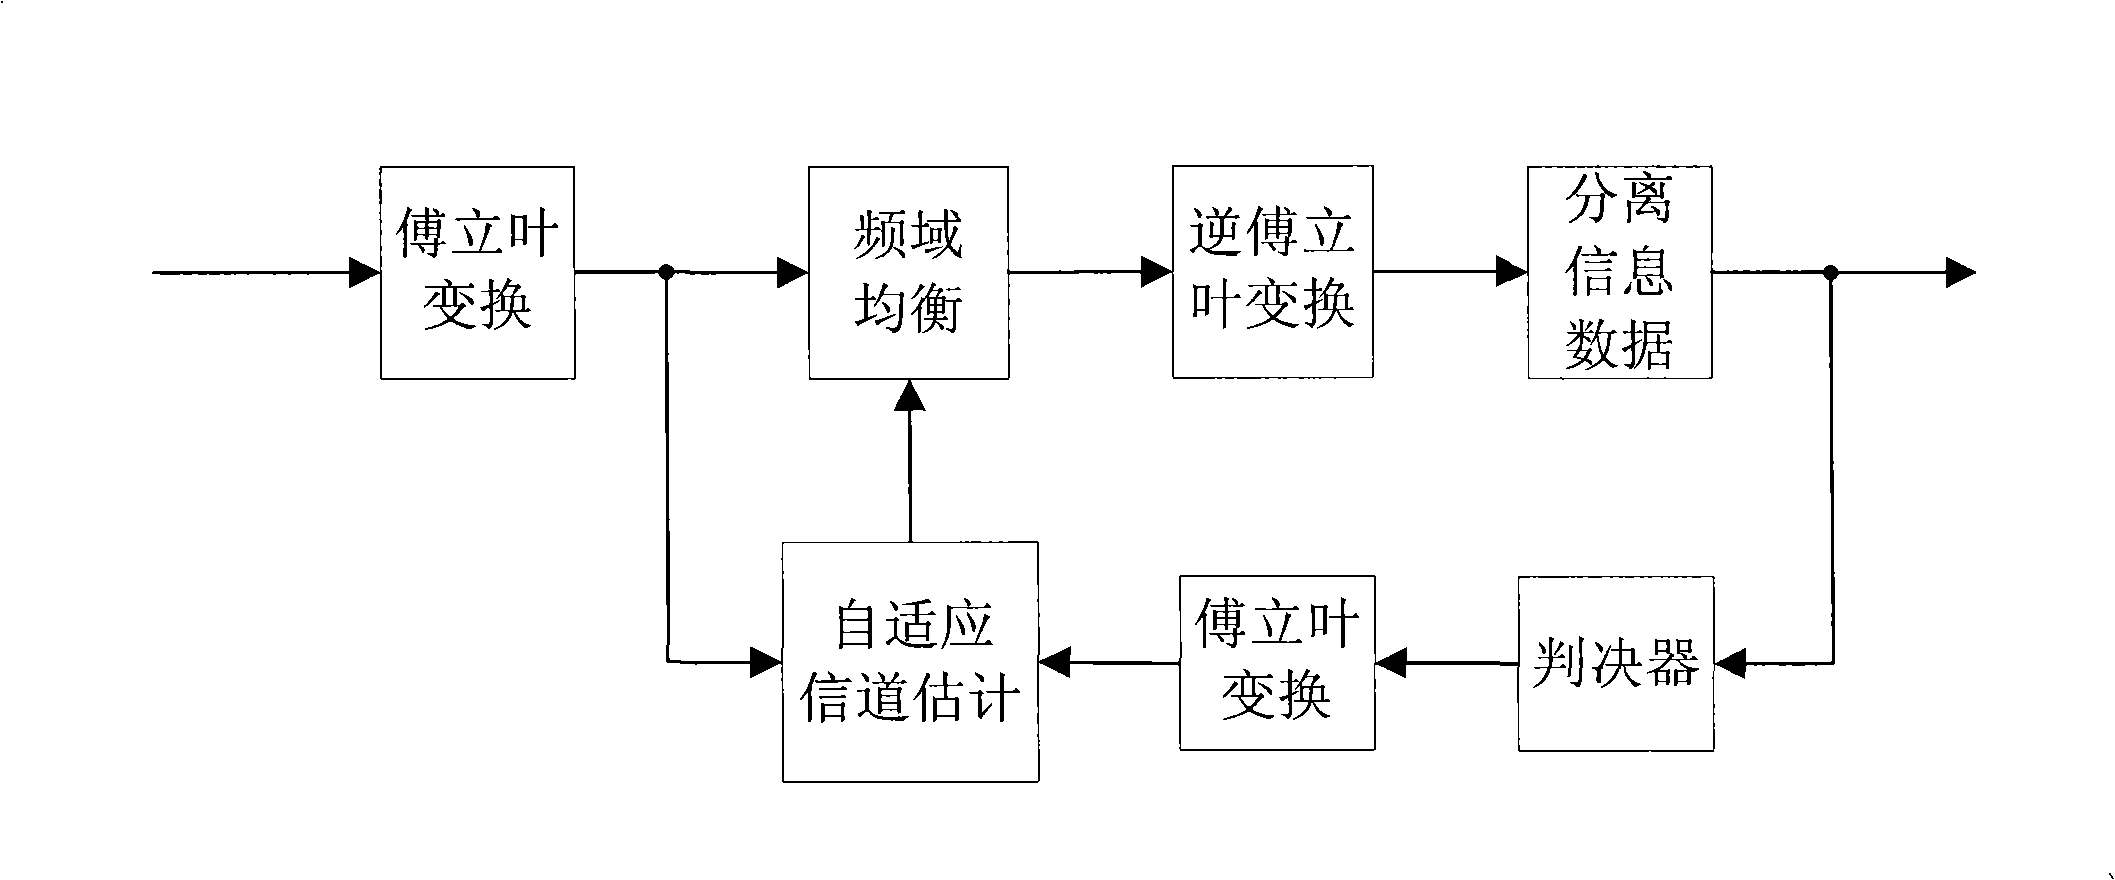 Adaptive equalization method for single carrier system